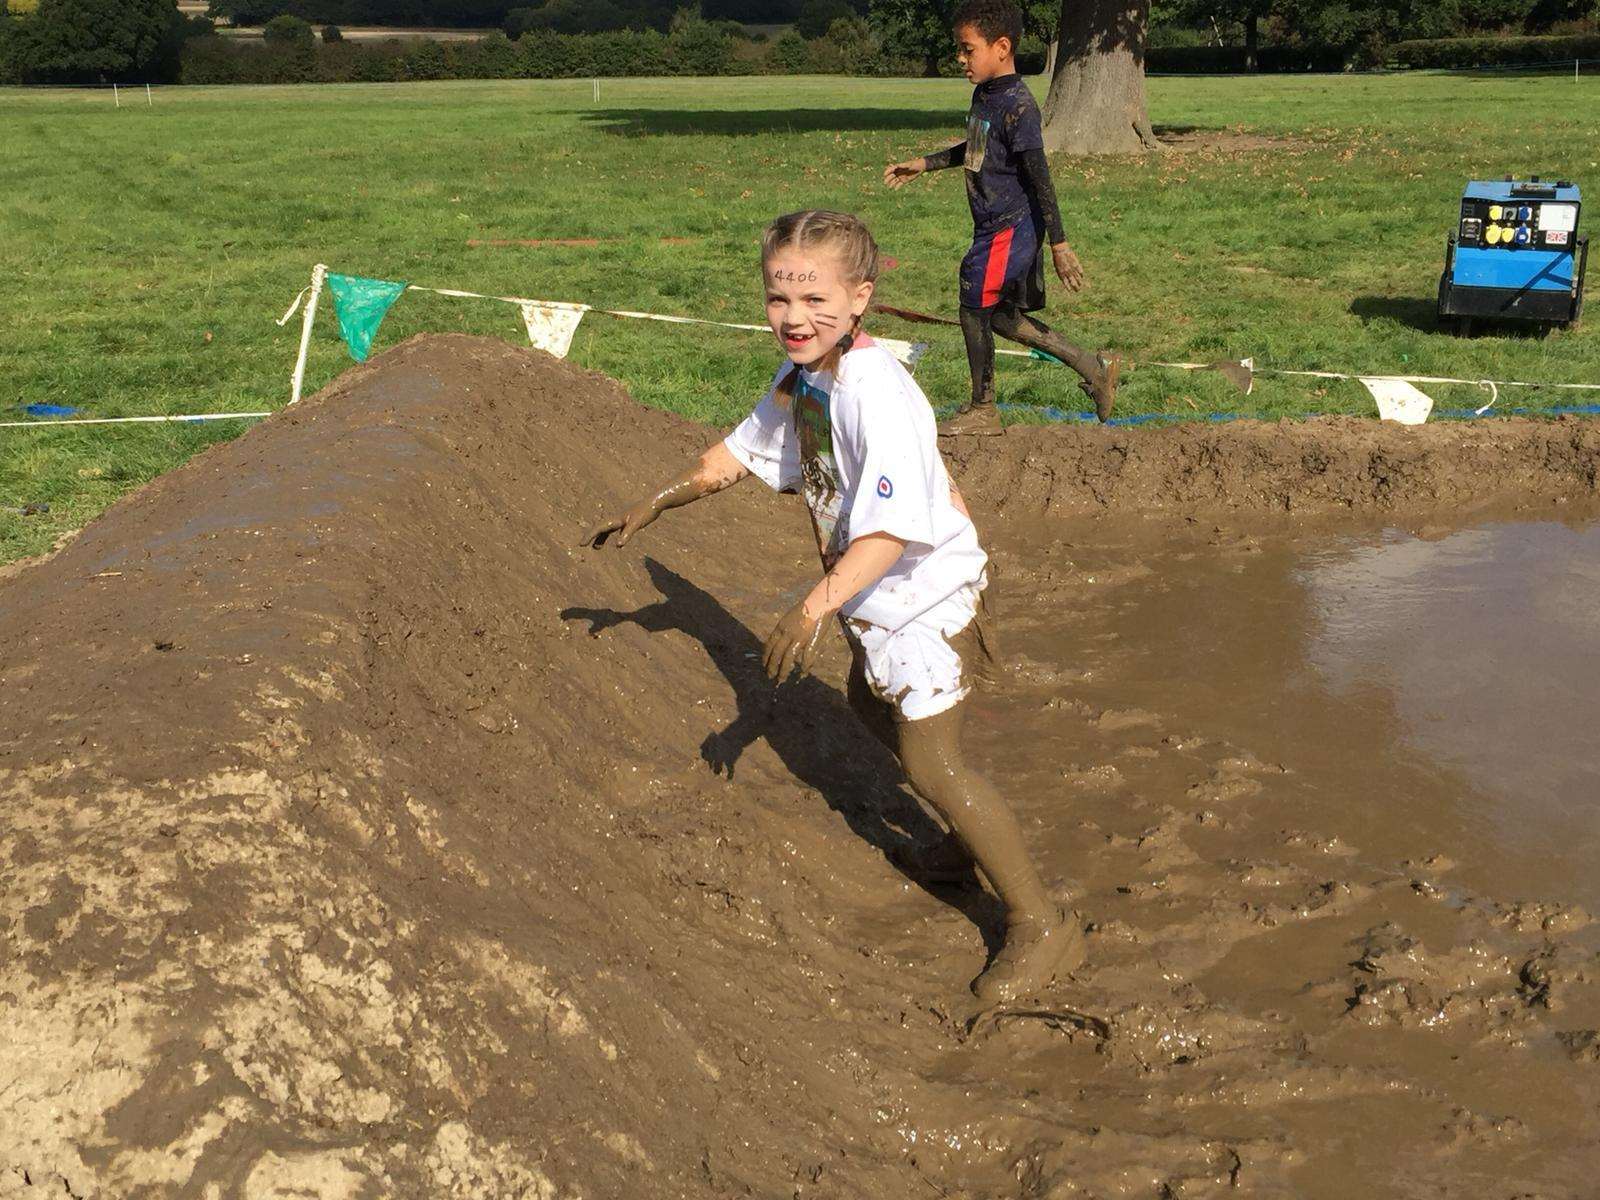 Brooke running through the muddy challenge. Picture: RAF Benevelant Fund